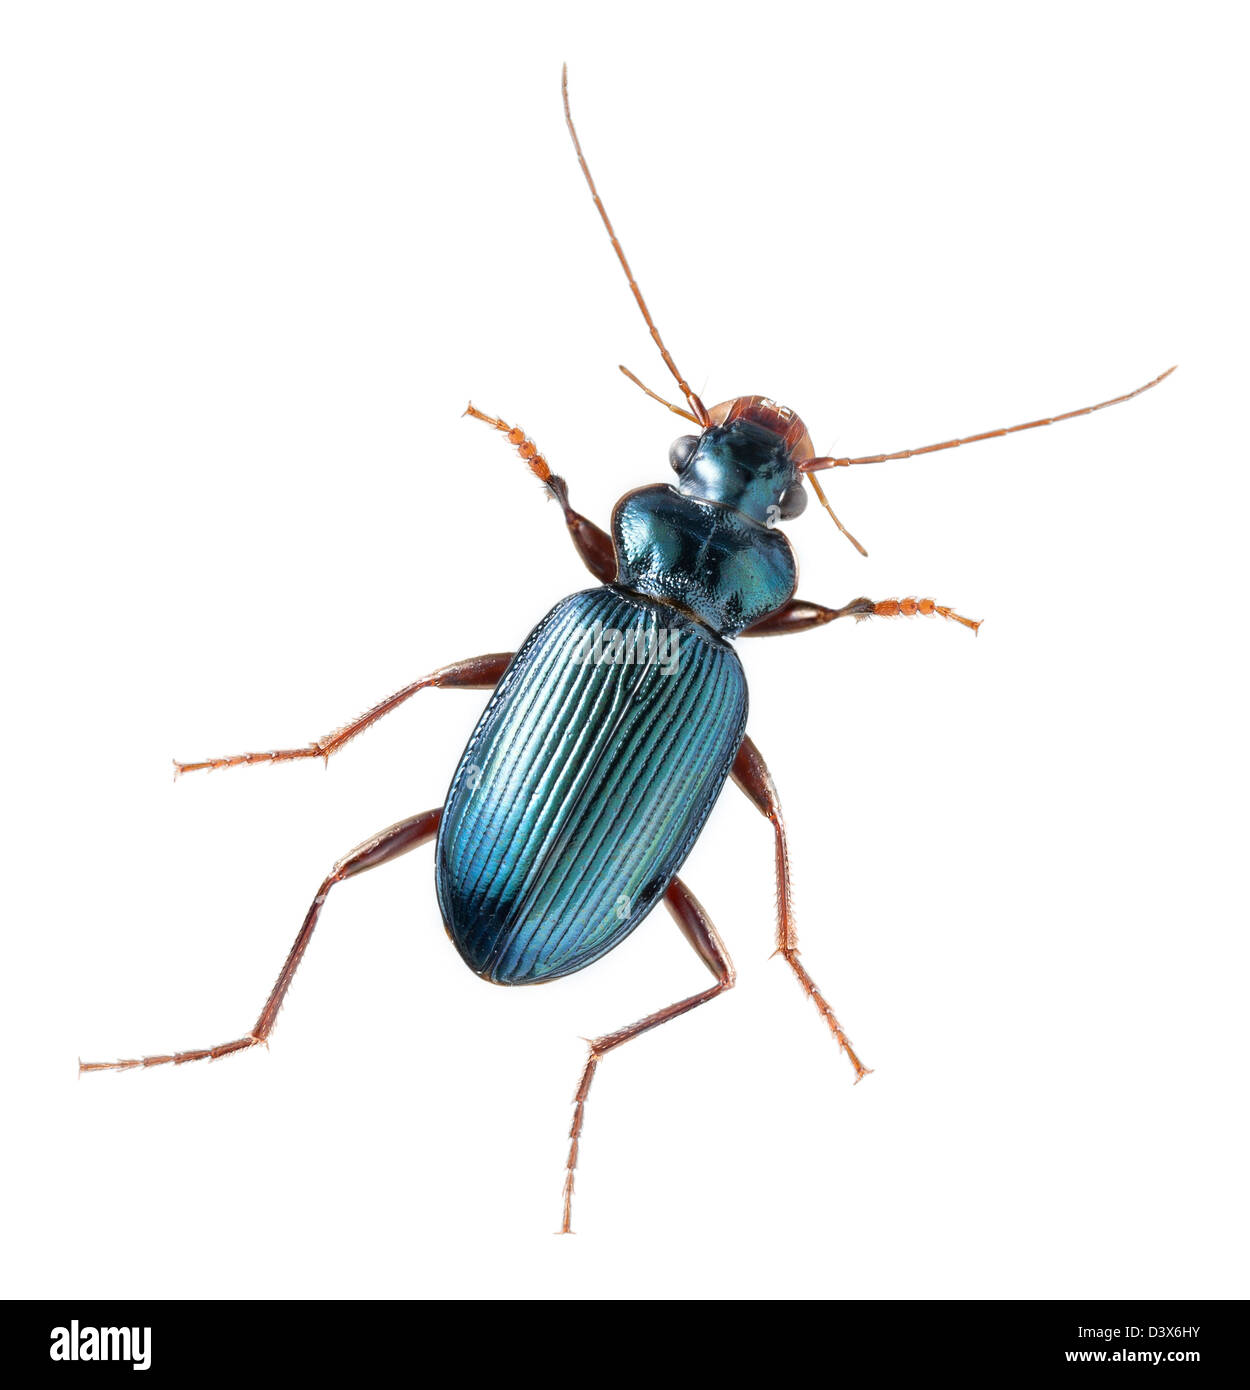 Ground beetle, Leistus fulvibarbis, Iridescencent body, cut out on white background. Stock Photo